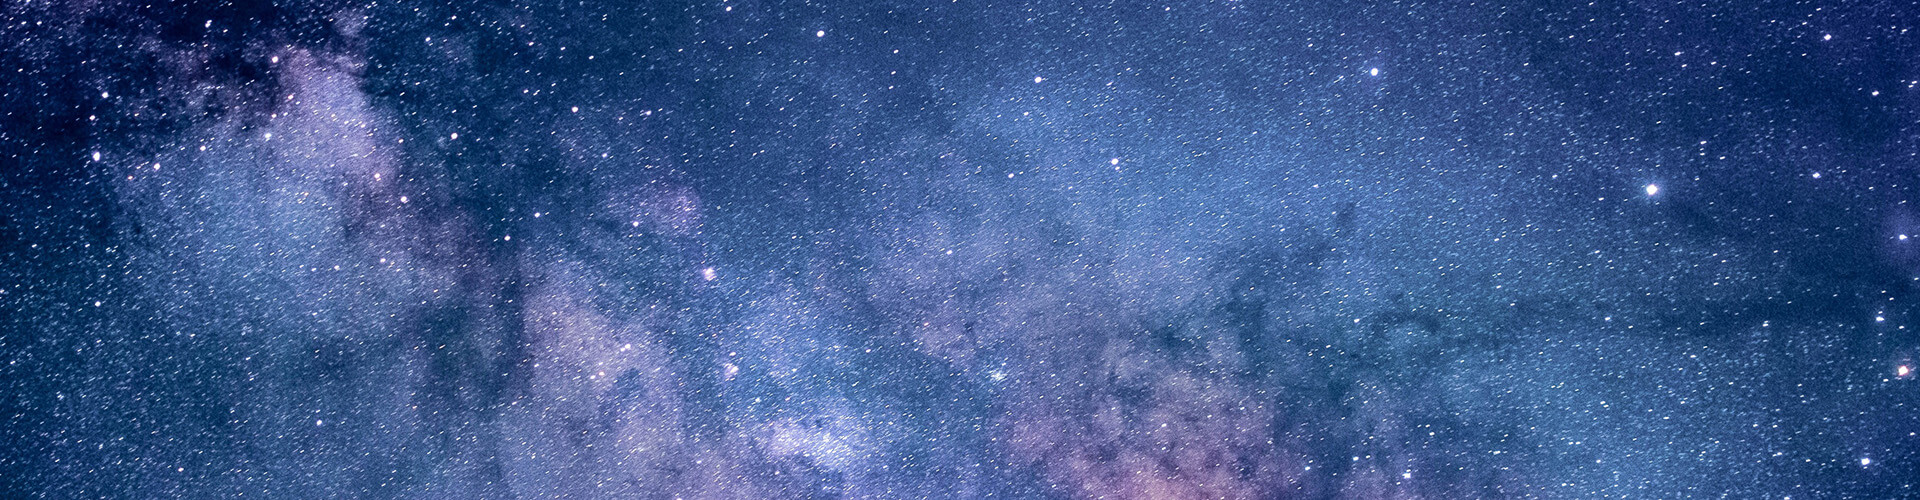 image of the night sky full of stars